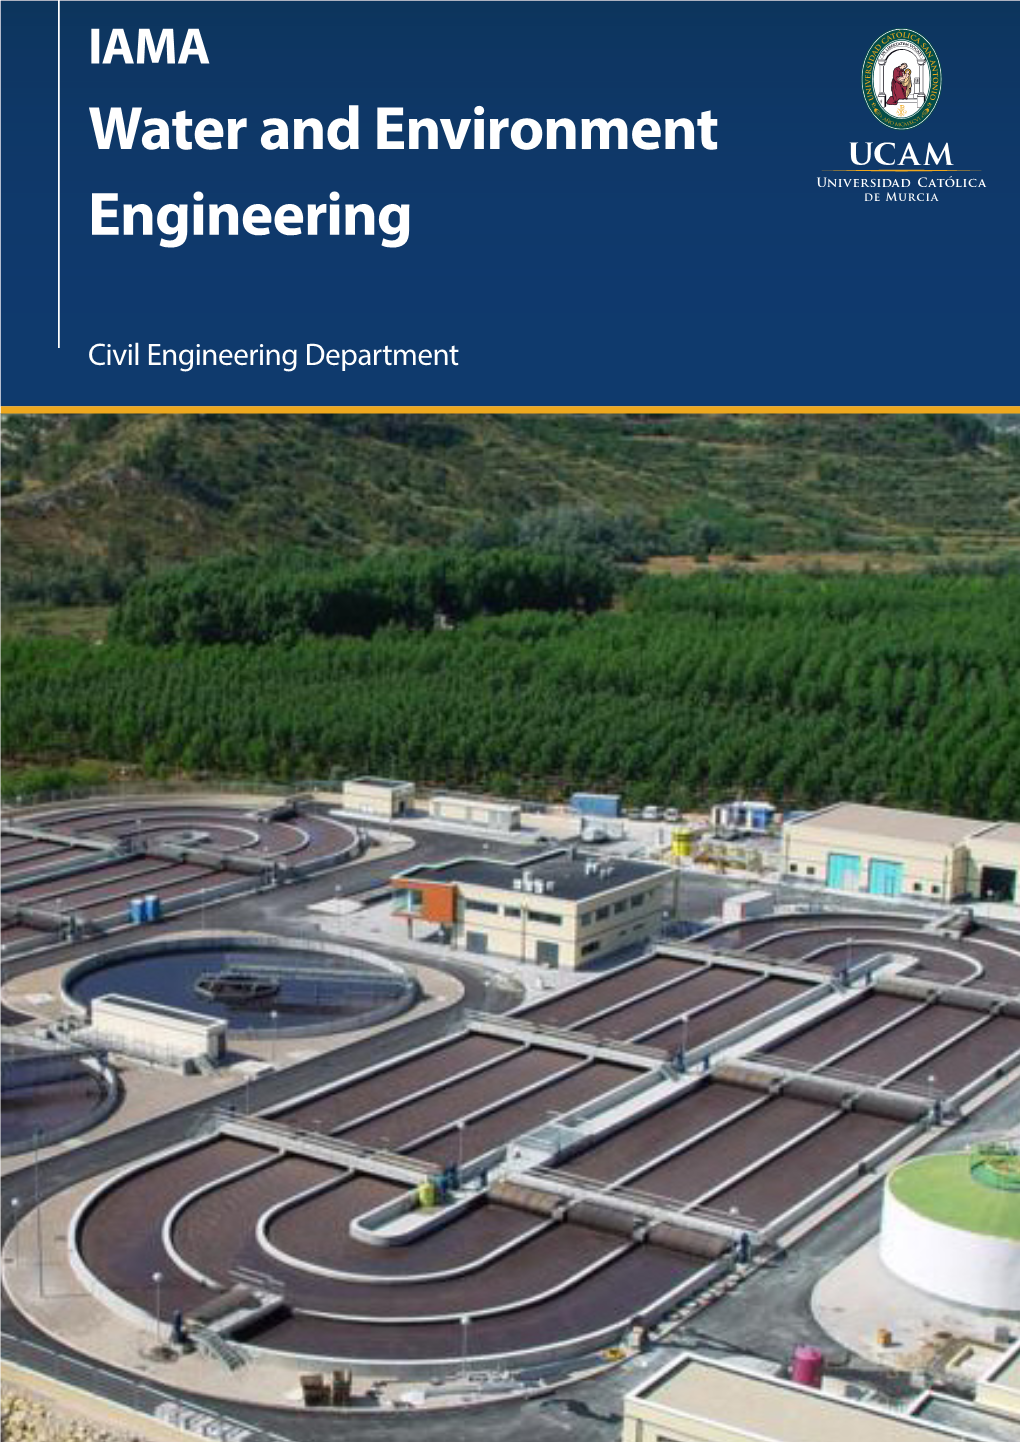 IAMA Water and Environment Engineering